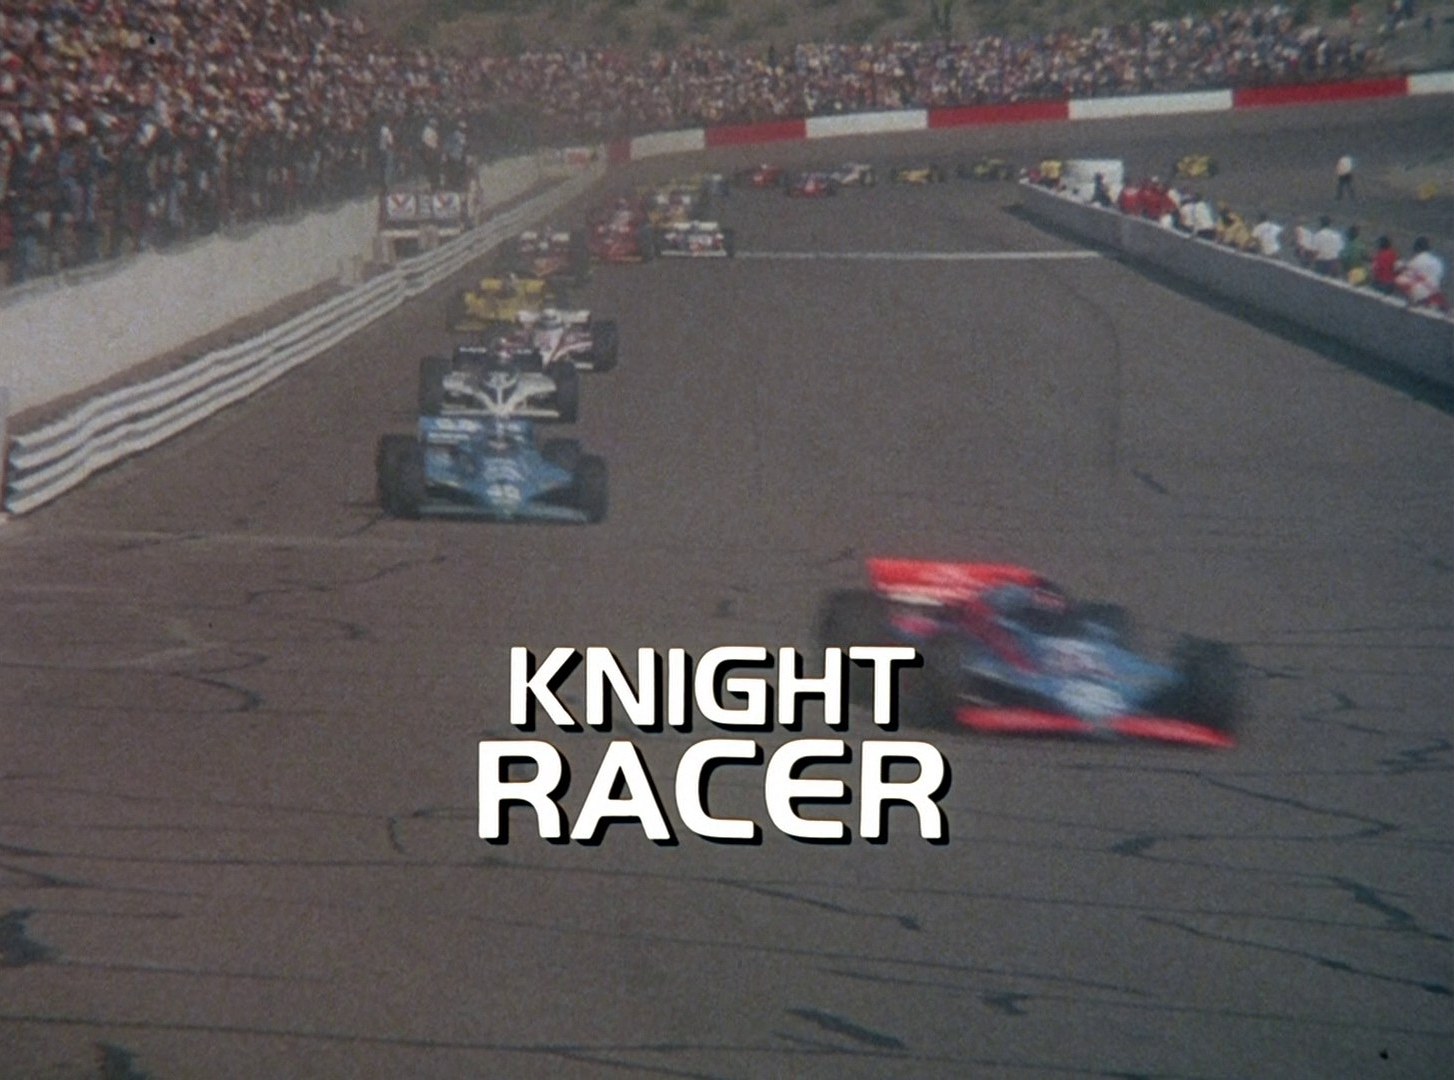 Knight Rider Season 4 - Episode 71 - Knight Racer - Photo 1